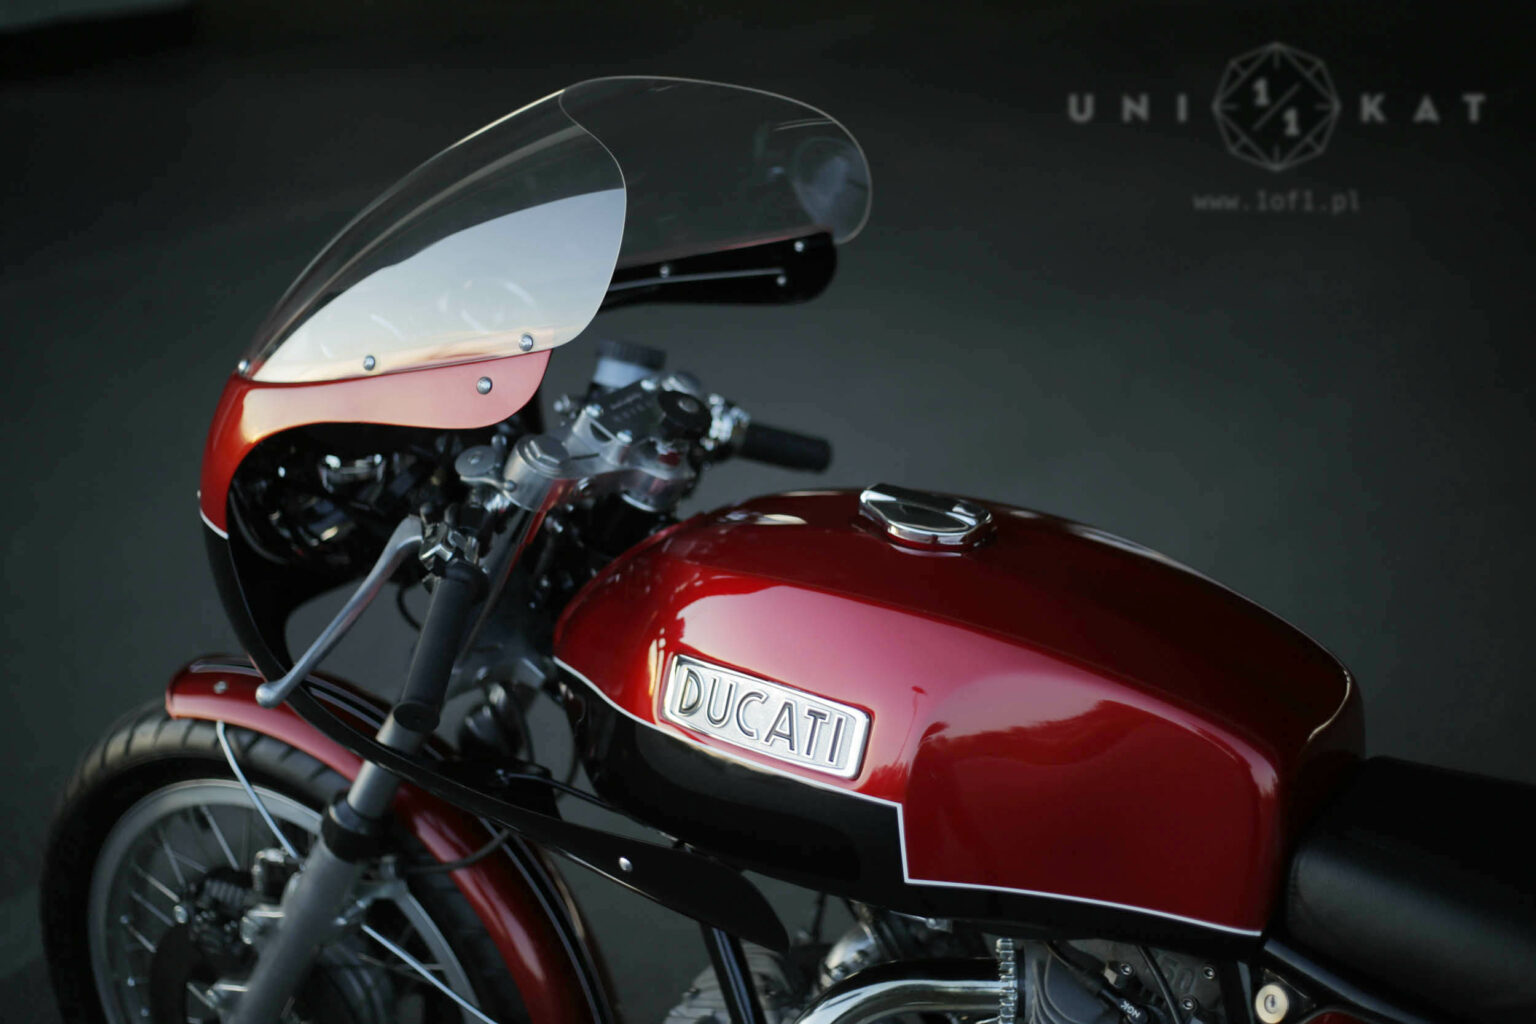 Reversible Replica - Unikat Ducati GT750 - Return of the Cafe Racers